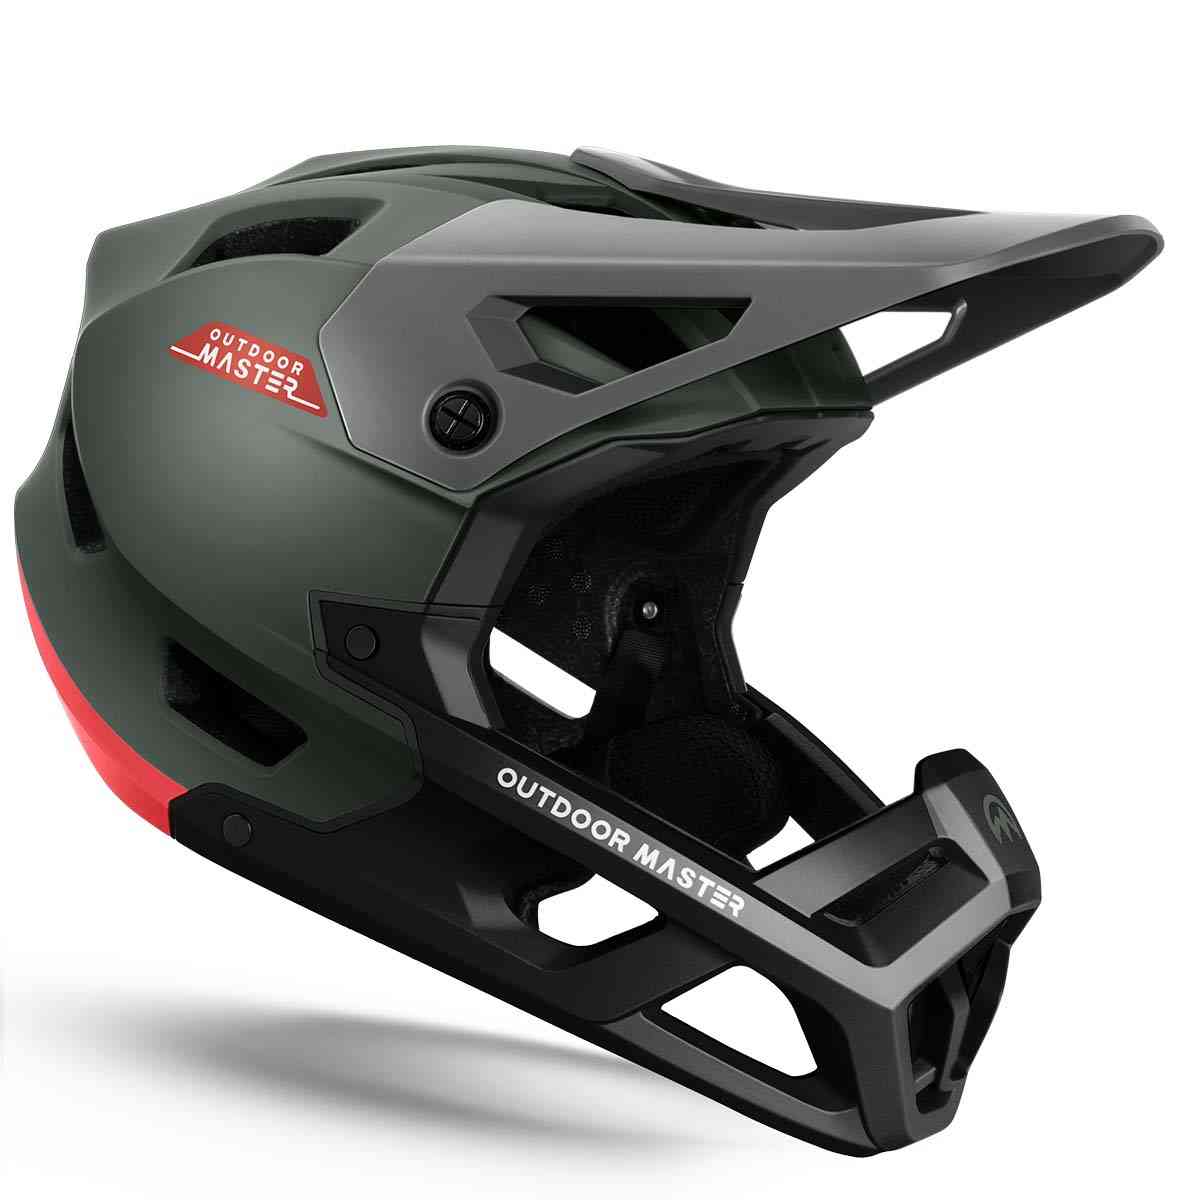 RHINO Full Face Bike Helmets